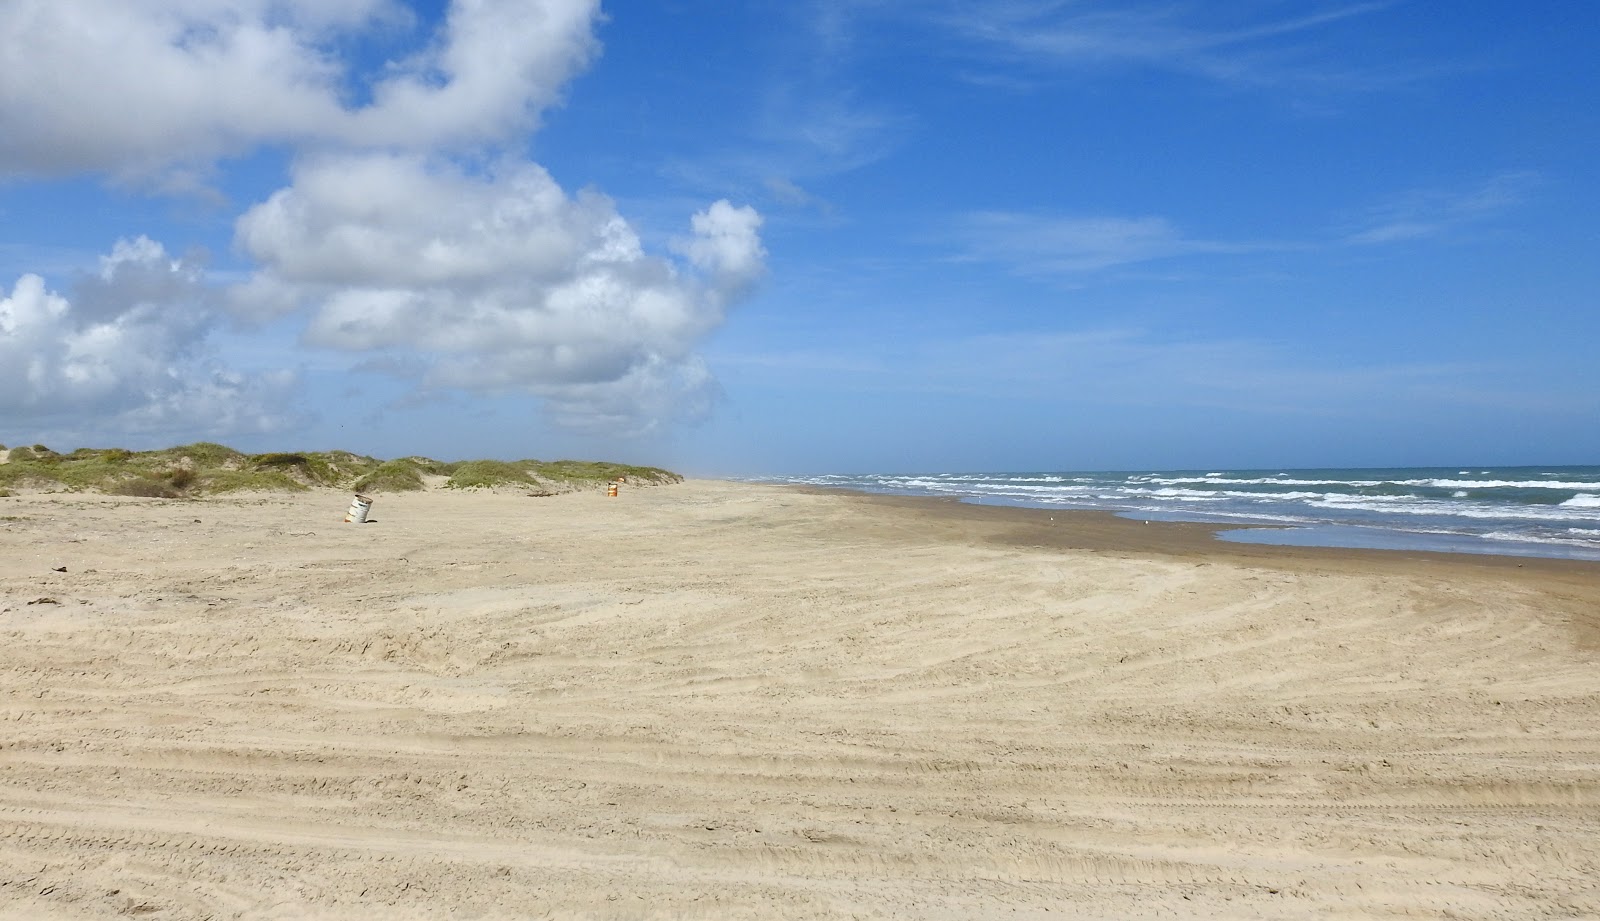 Foto av Boca Chica beach med grå sand yta